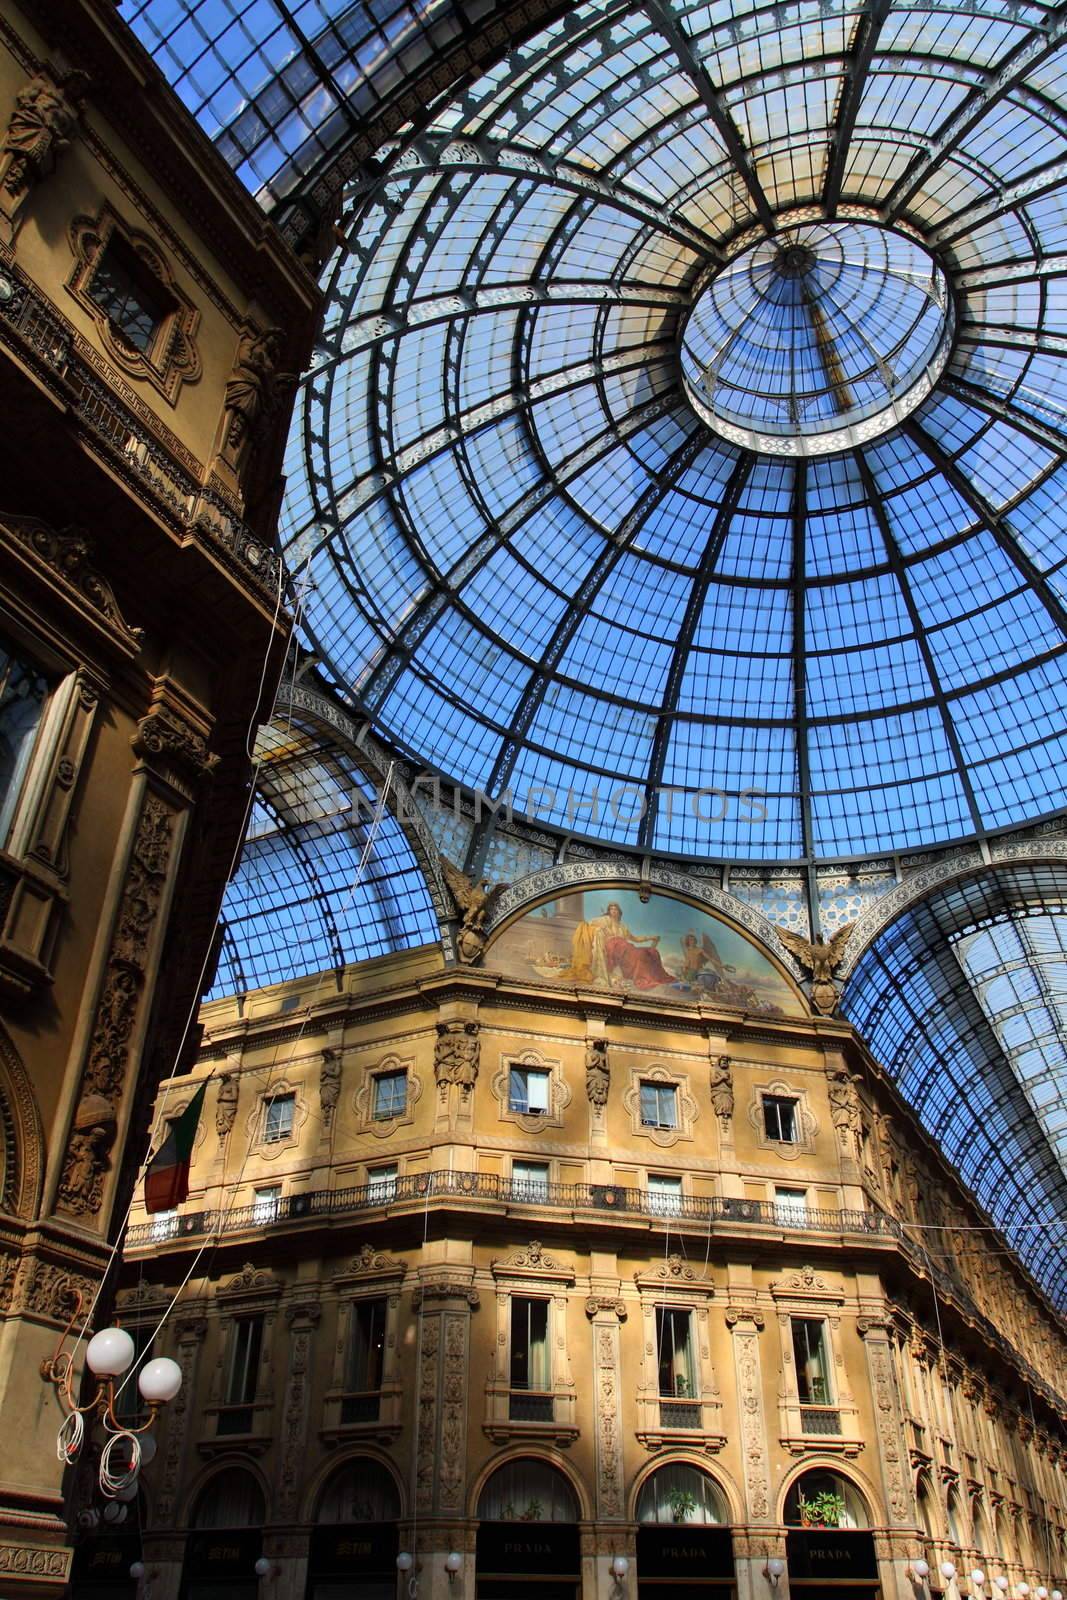 Glass gallery - Galleria Vittorio Emanuele - Milan - Italy  by mariusz_prusaczyk